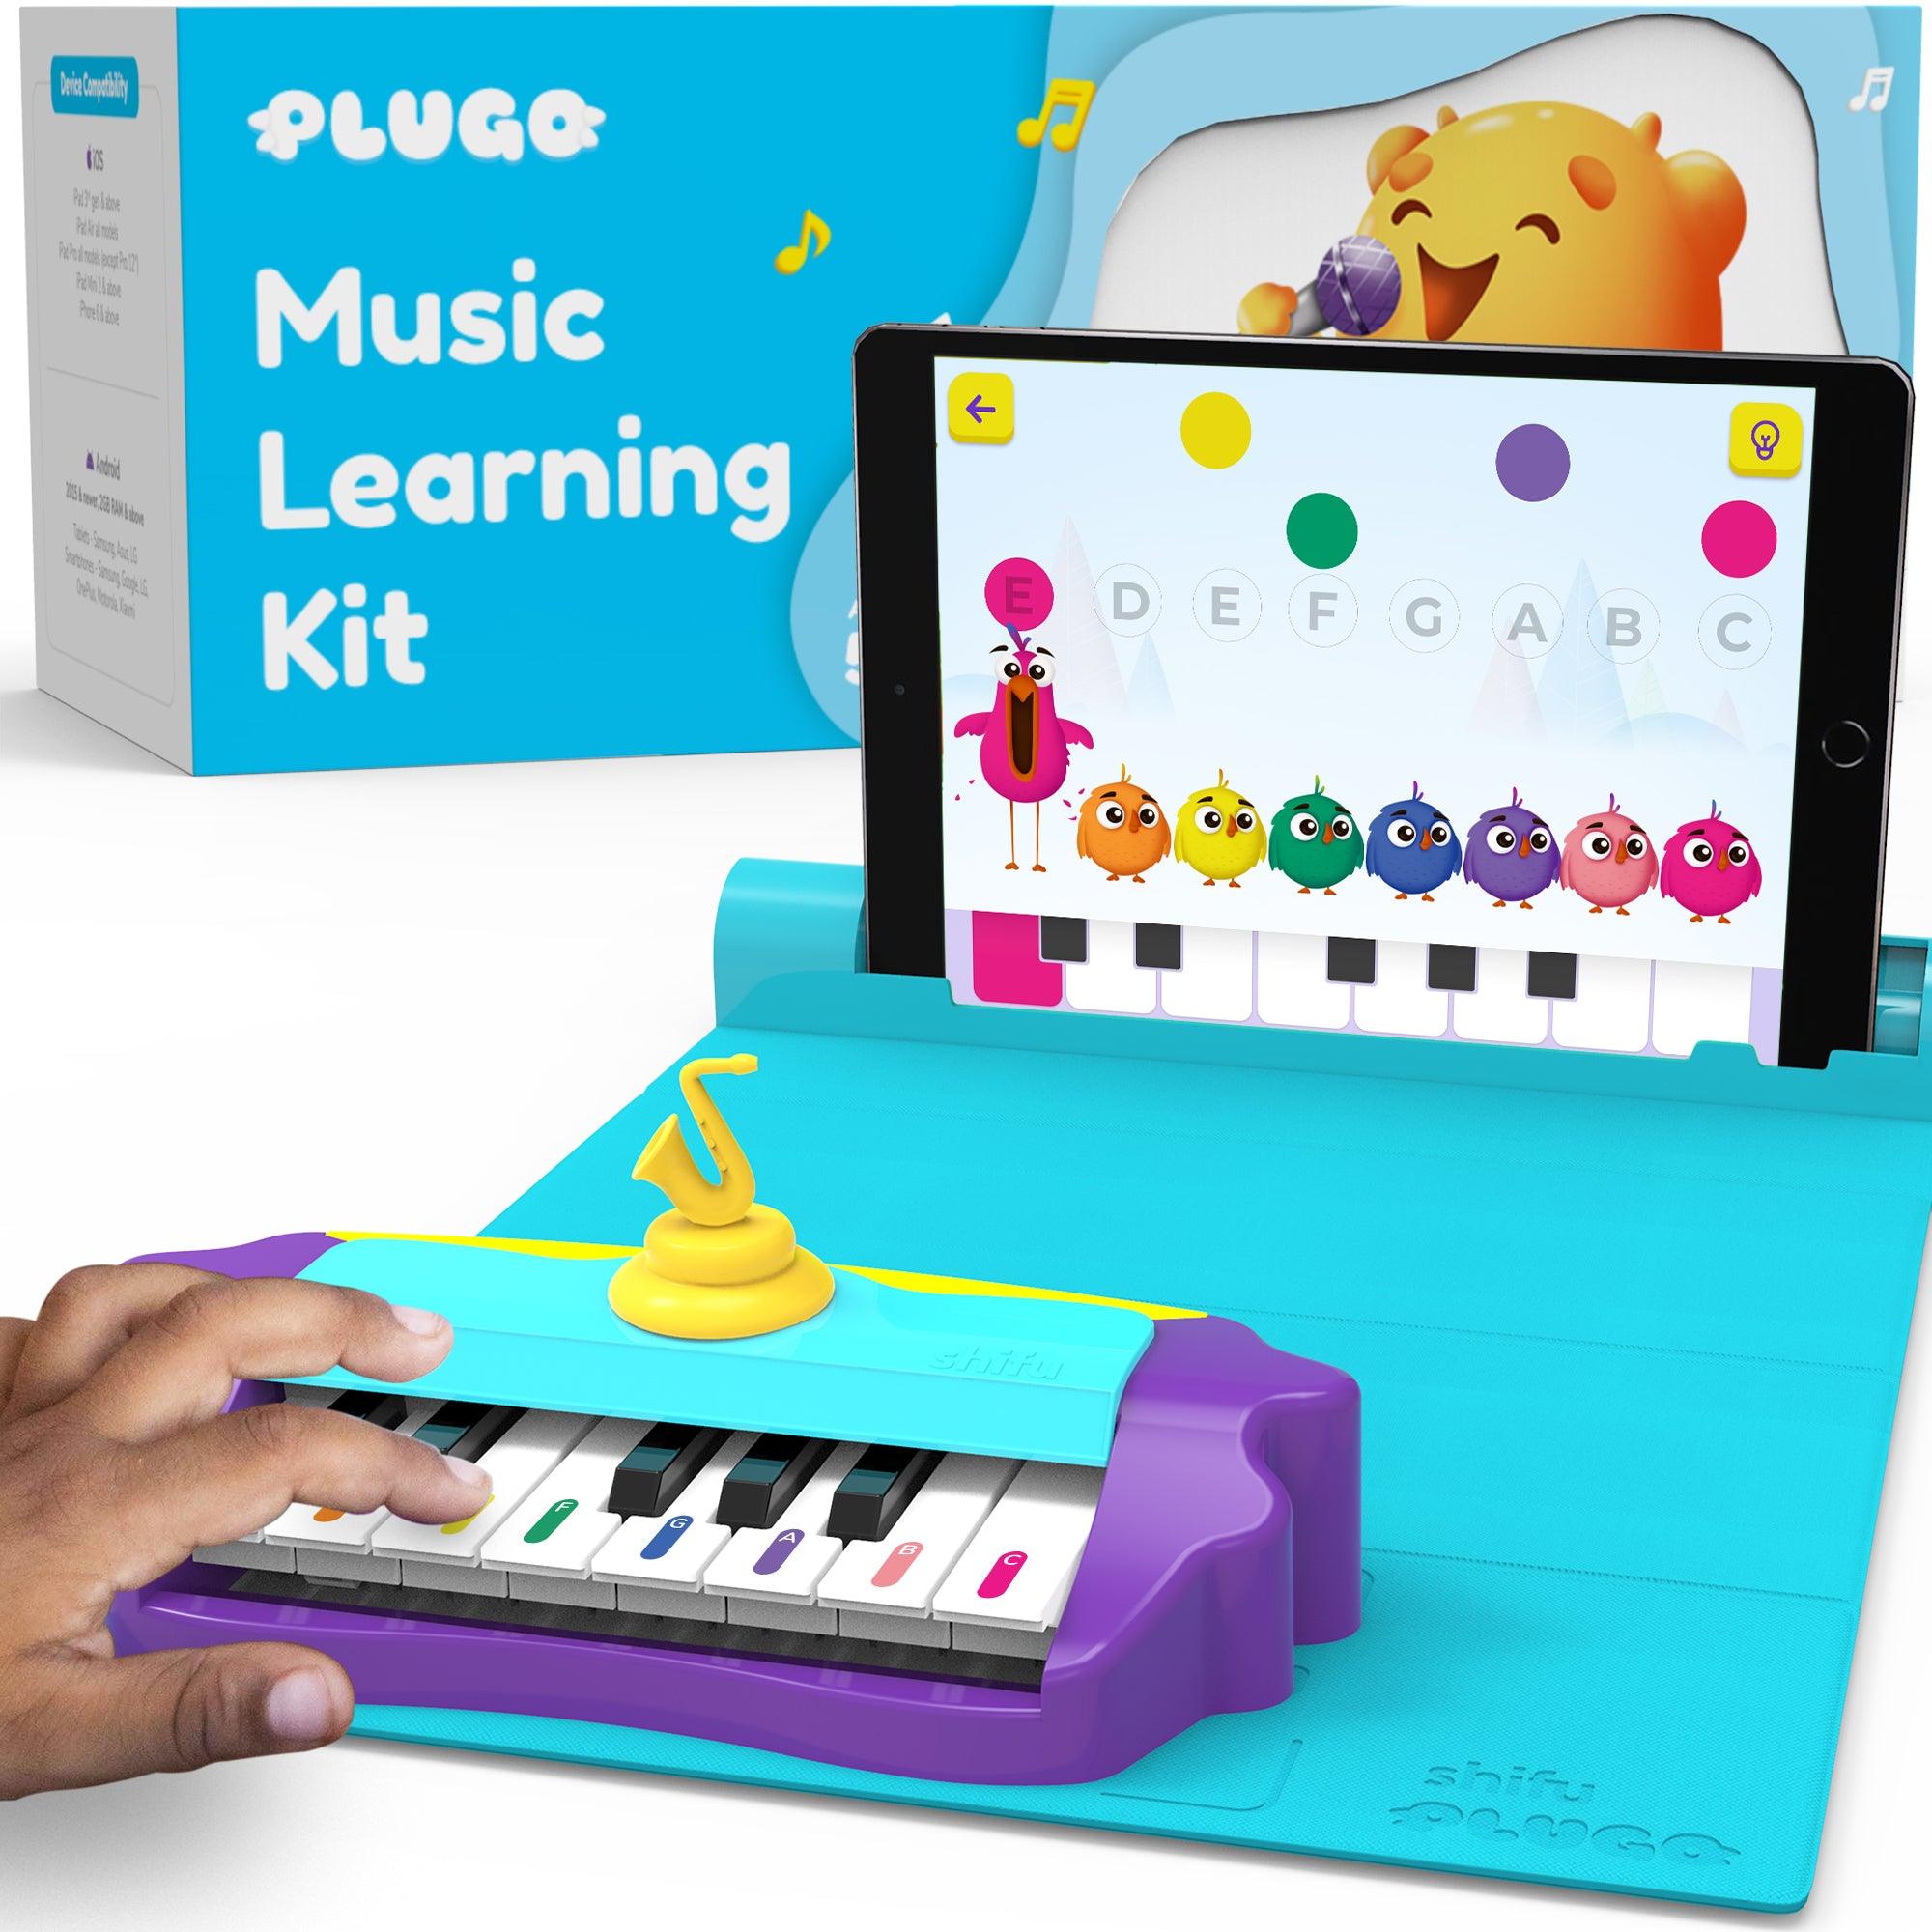 PlayShifu Plugo: Educational Stem Toys For Kids - BYKidO